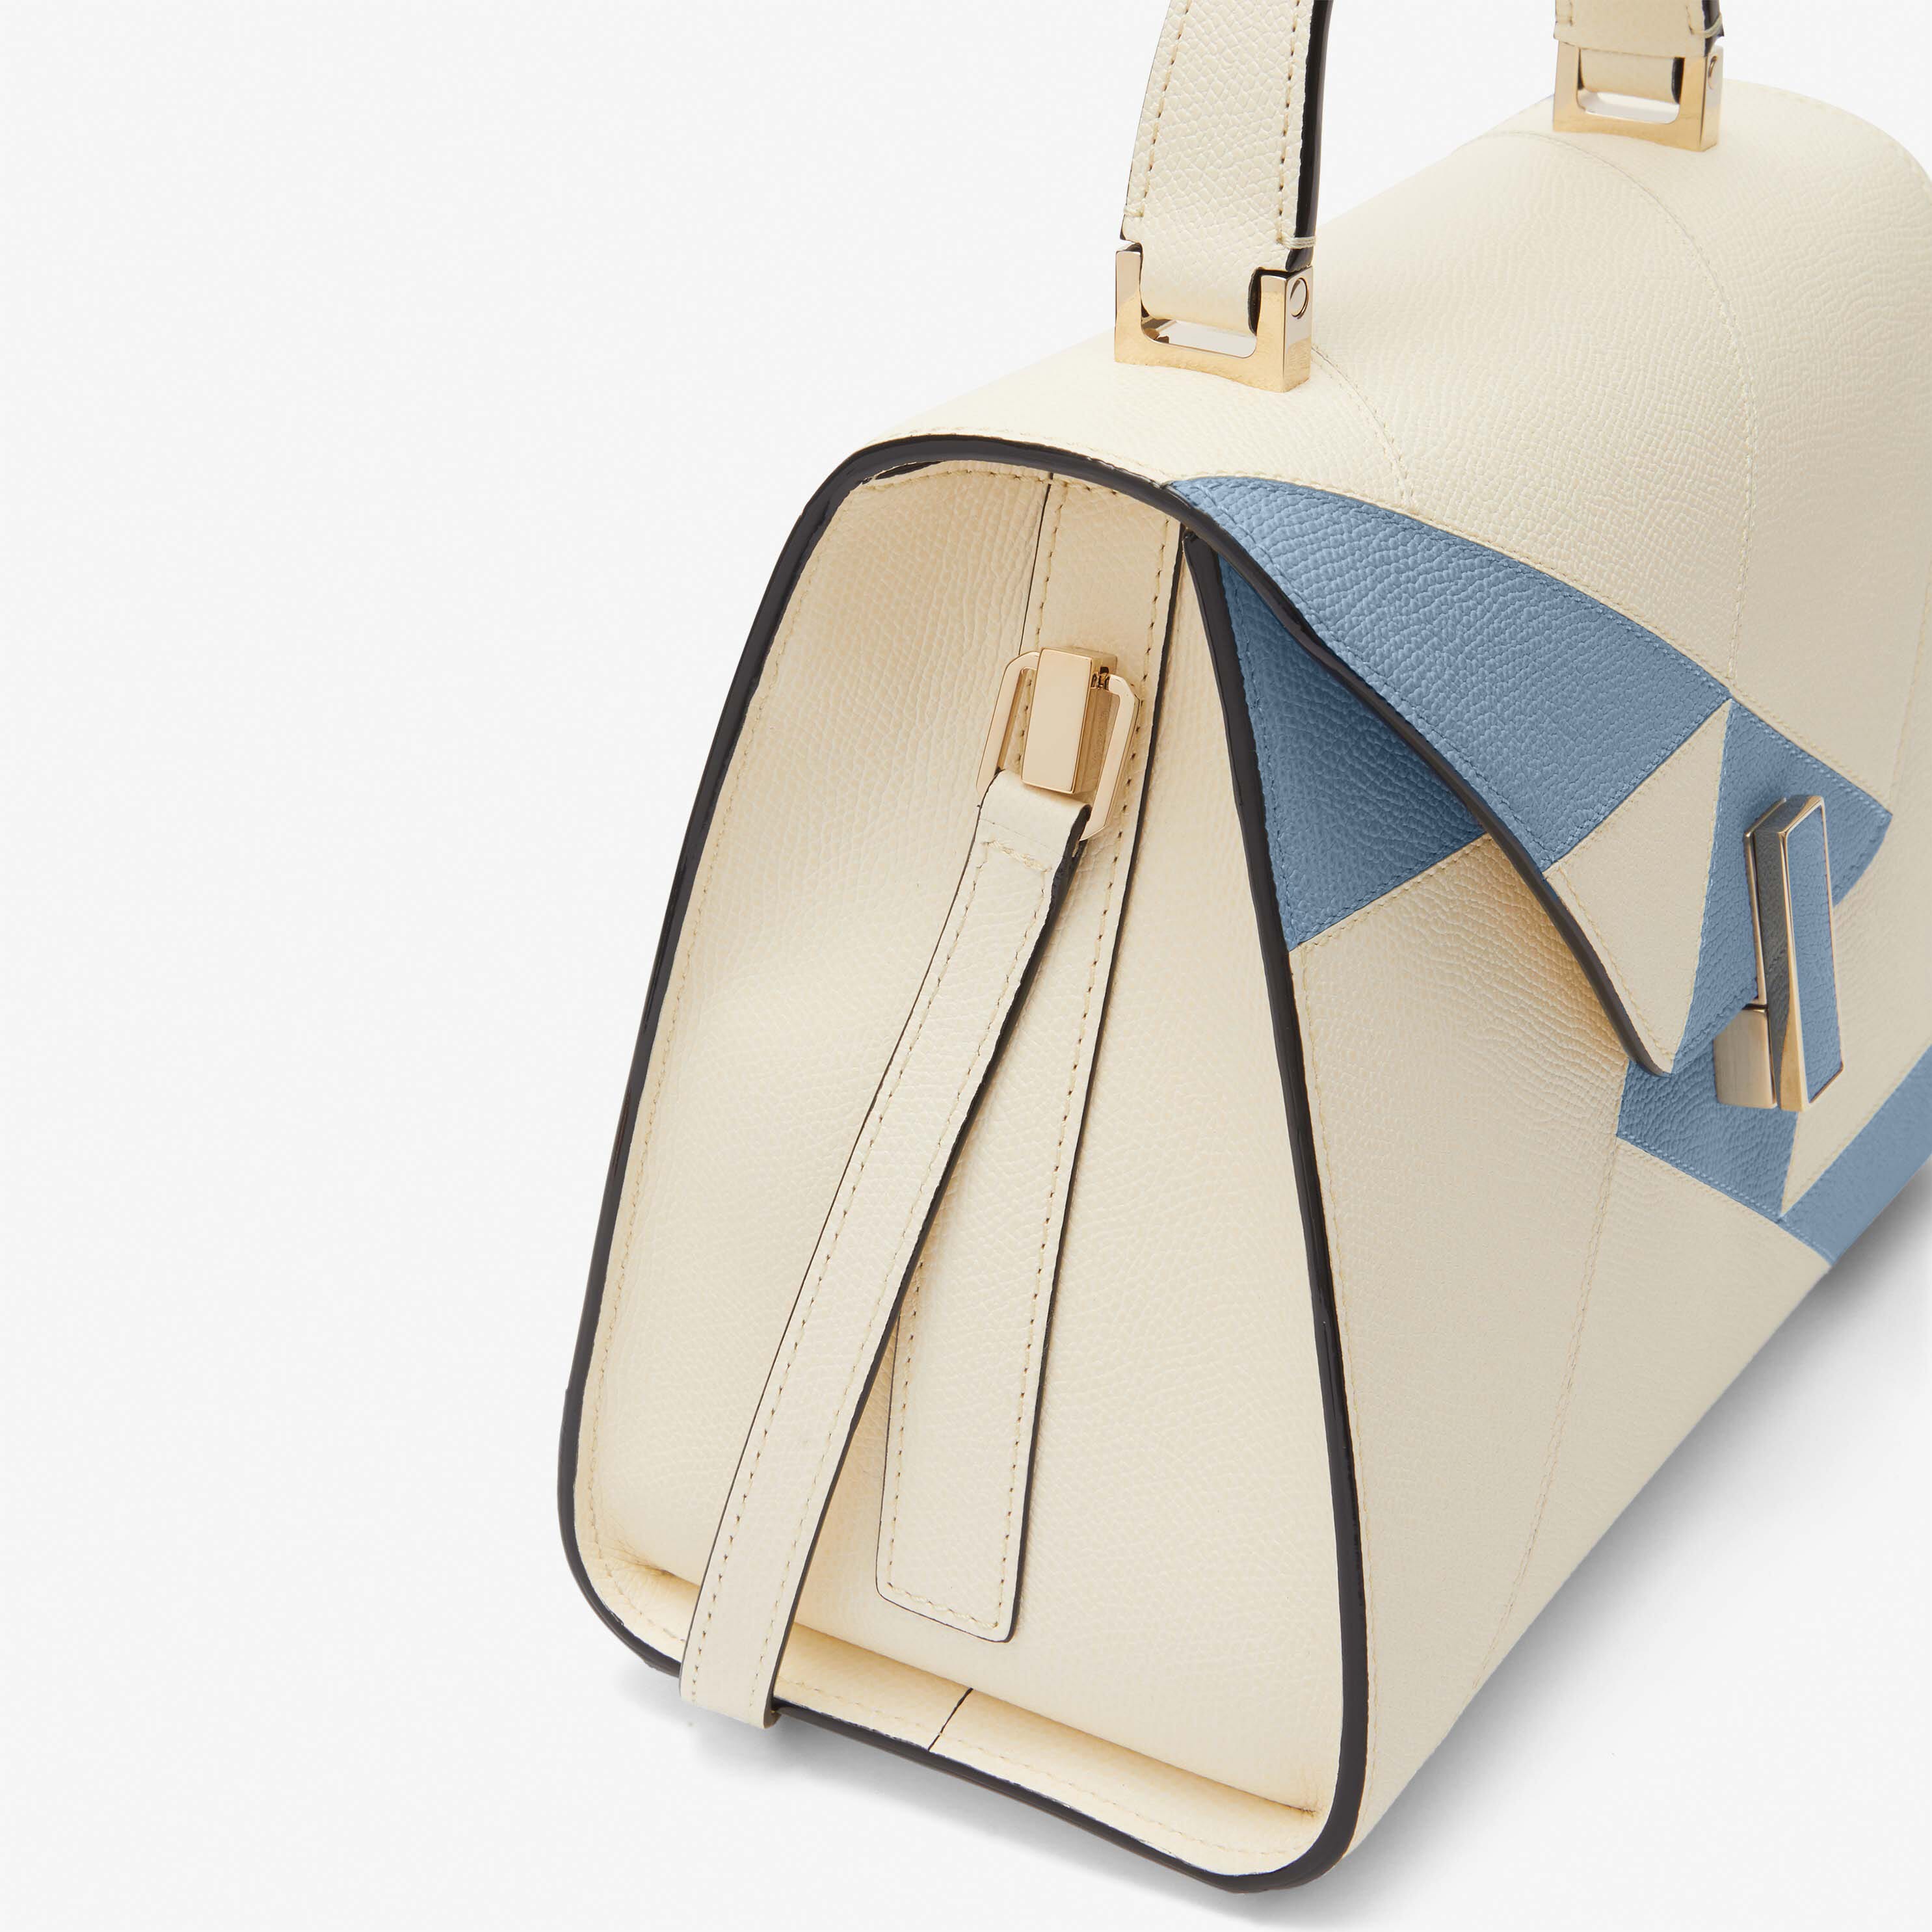 Iside Carousel Top handle Medium bag - Pergamena White/Shirt Blue - Vitello VS-Intarsio Rombo - Valextra - 4